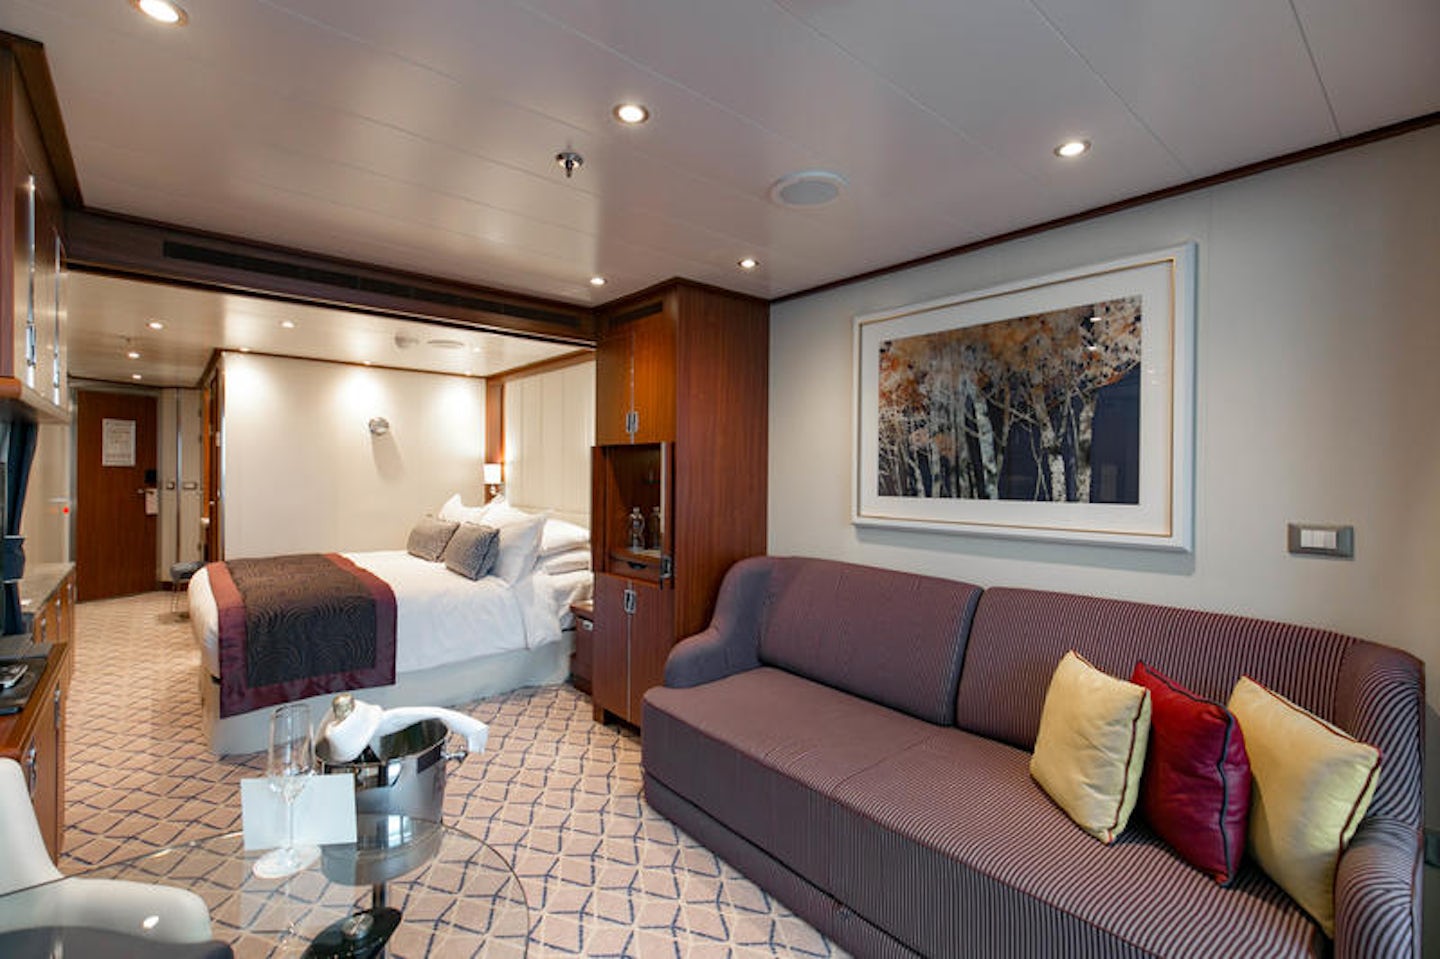 Veranda Suite on Seabourn Ovation Cruise Ship - Cruise Critic